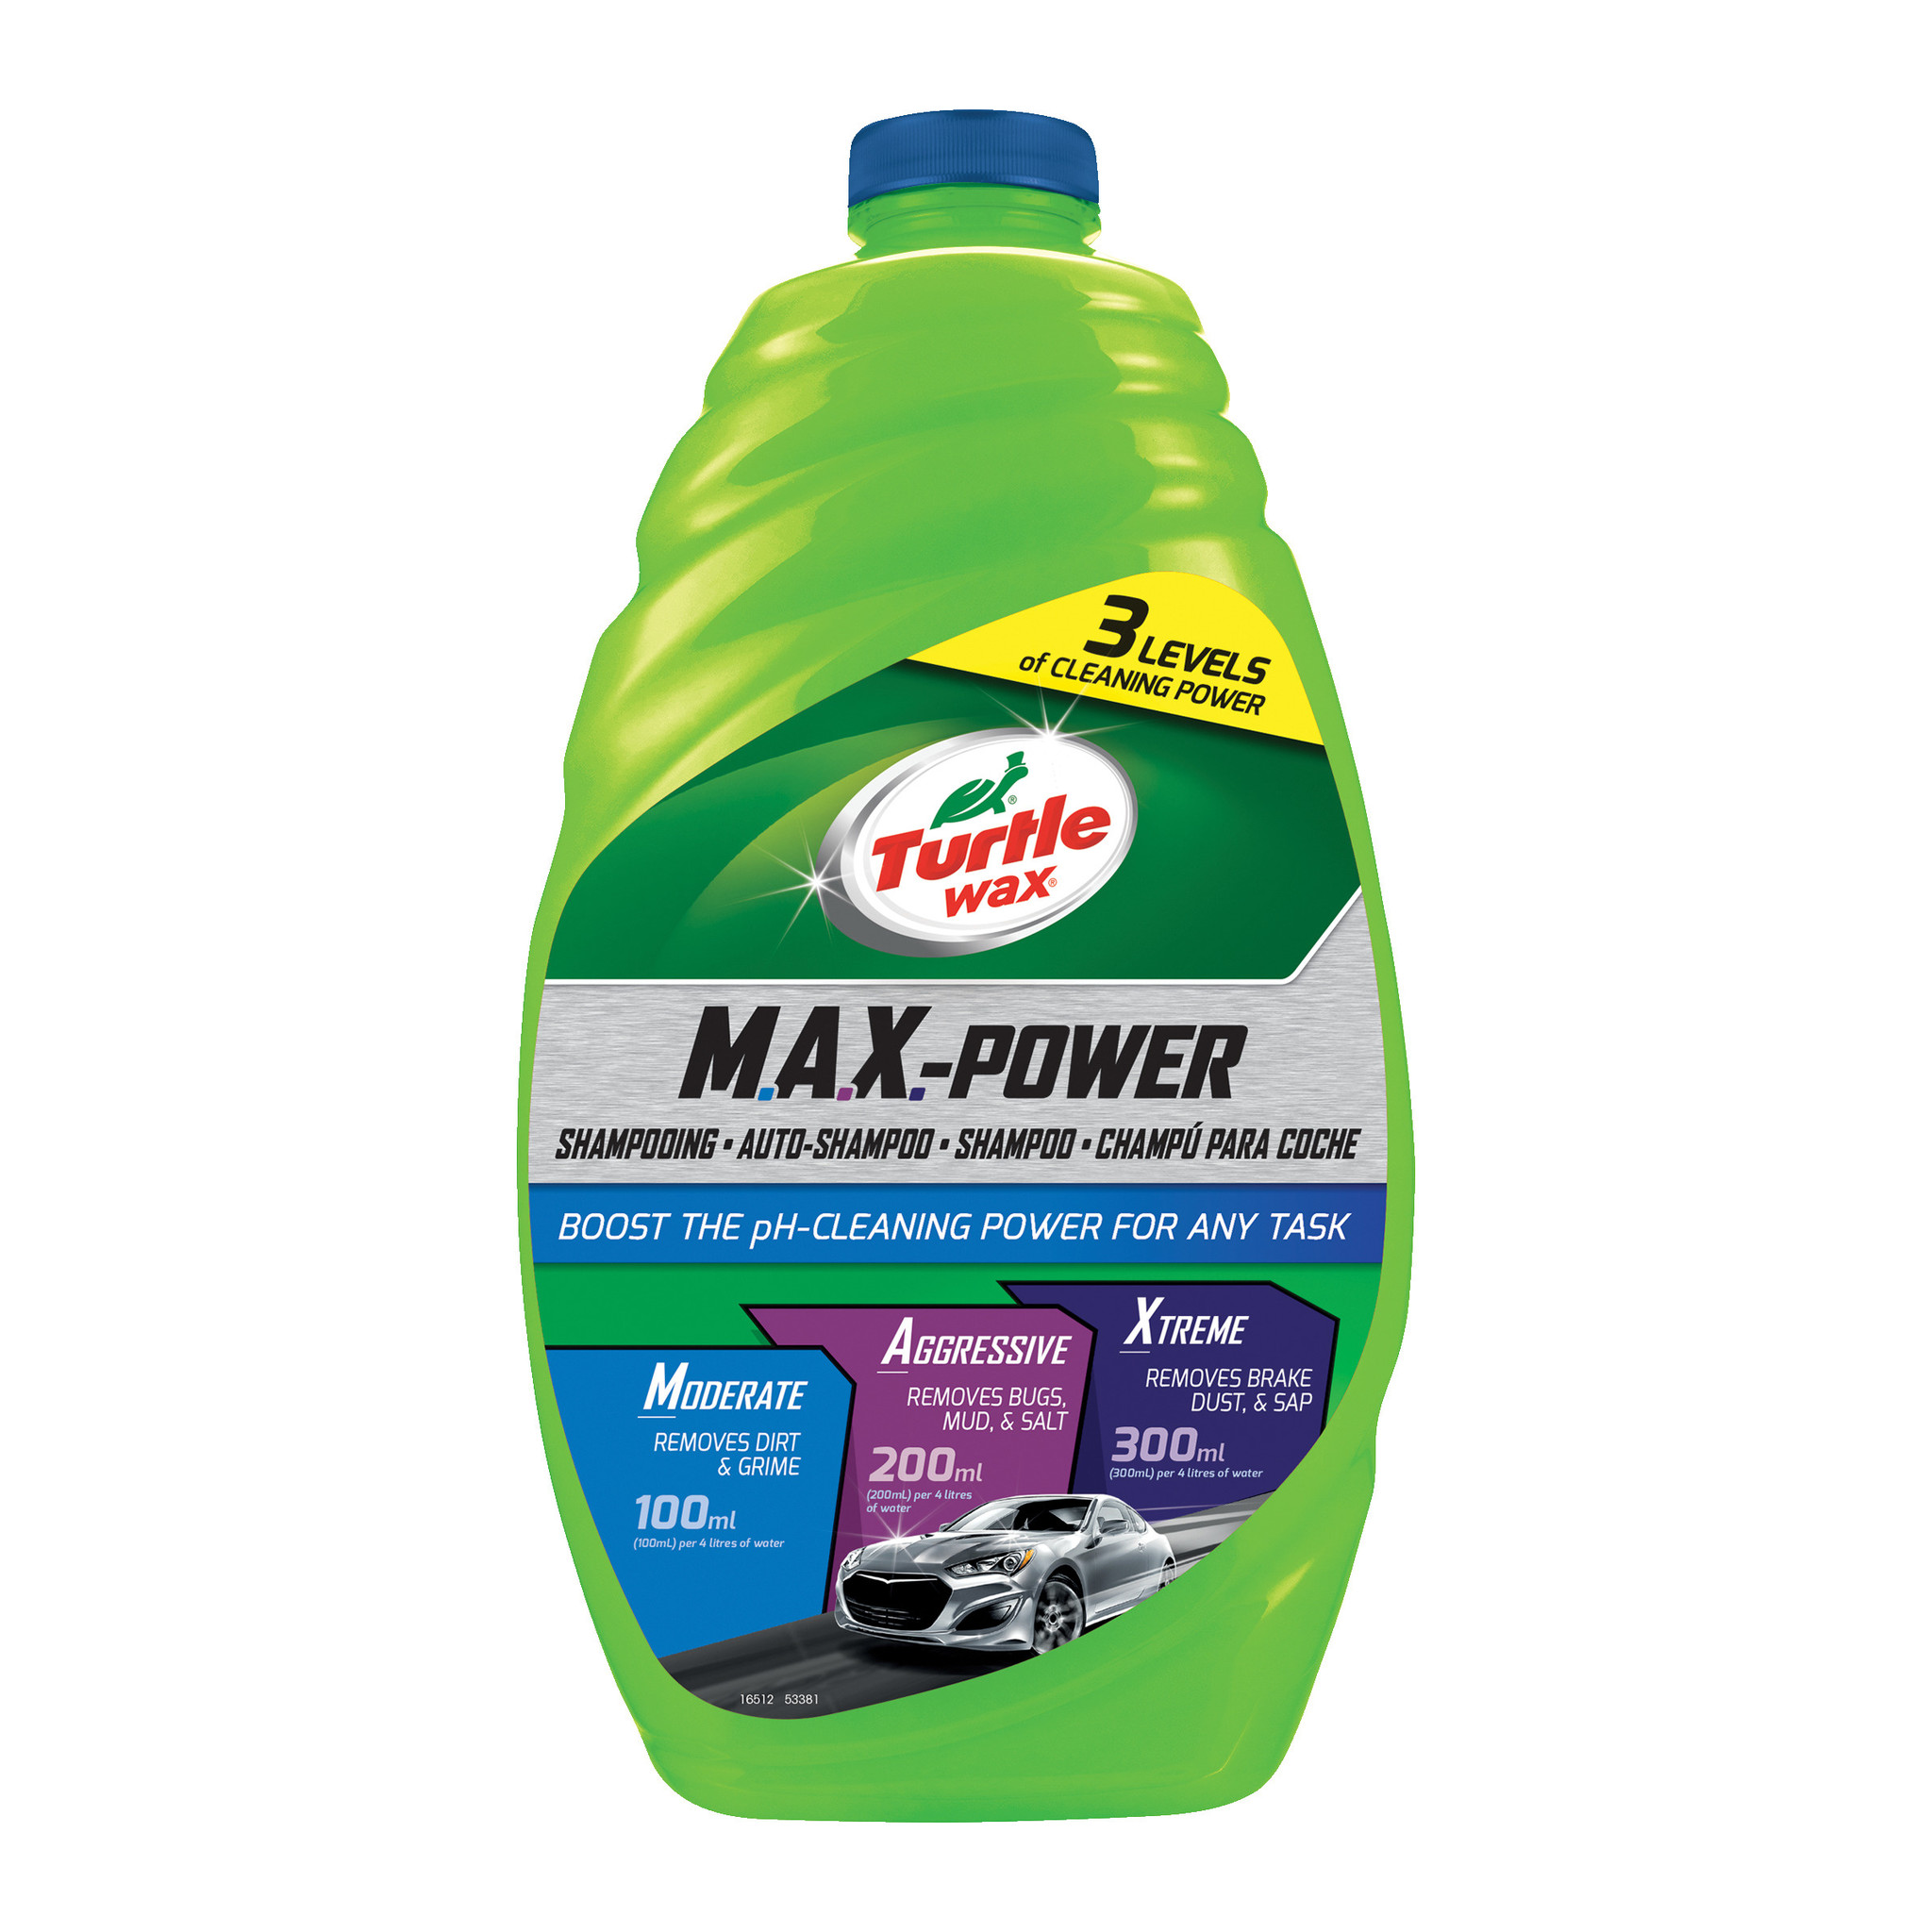 Wax 1.42L Shampoo Wash Car - Turtle Max - Power Carchemicals